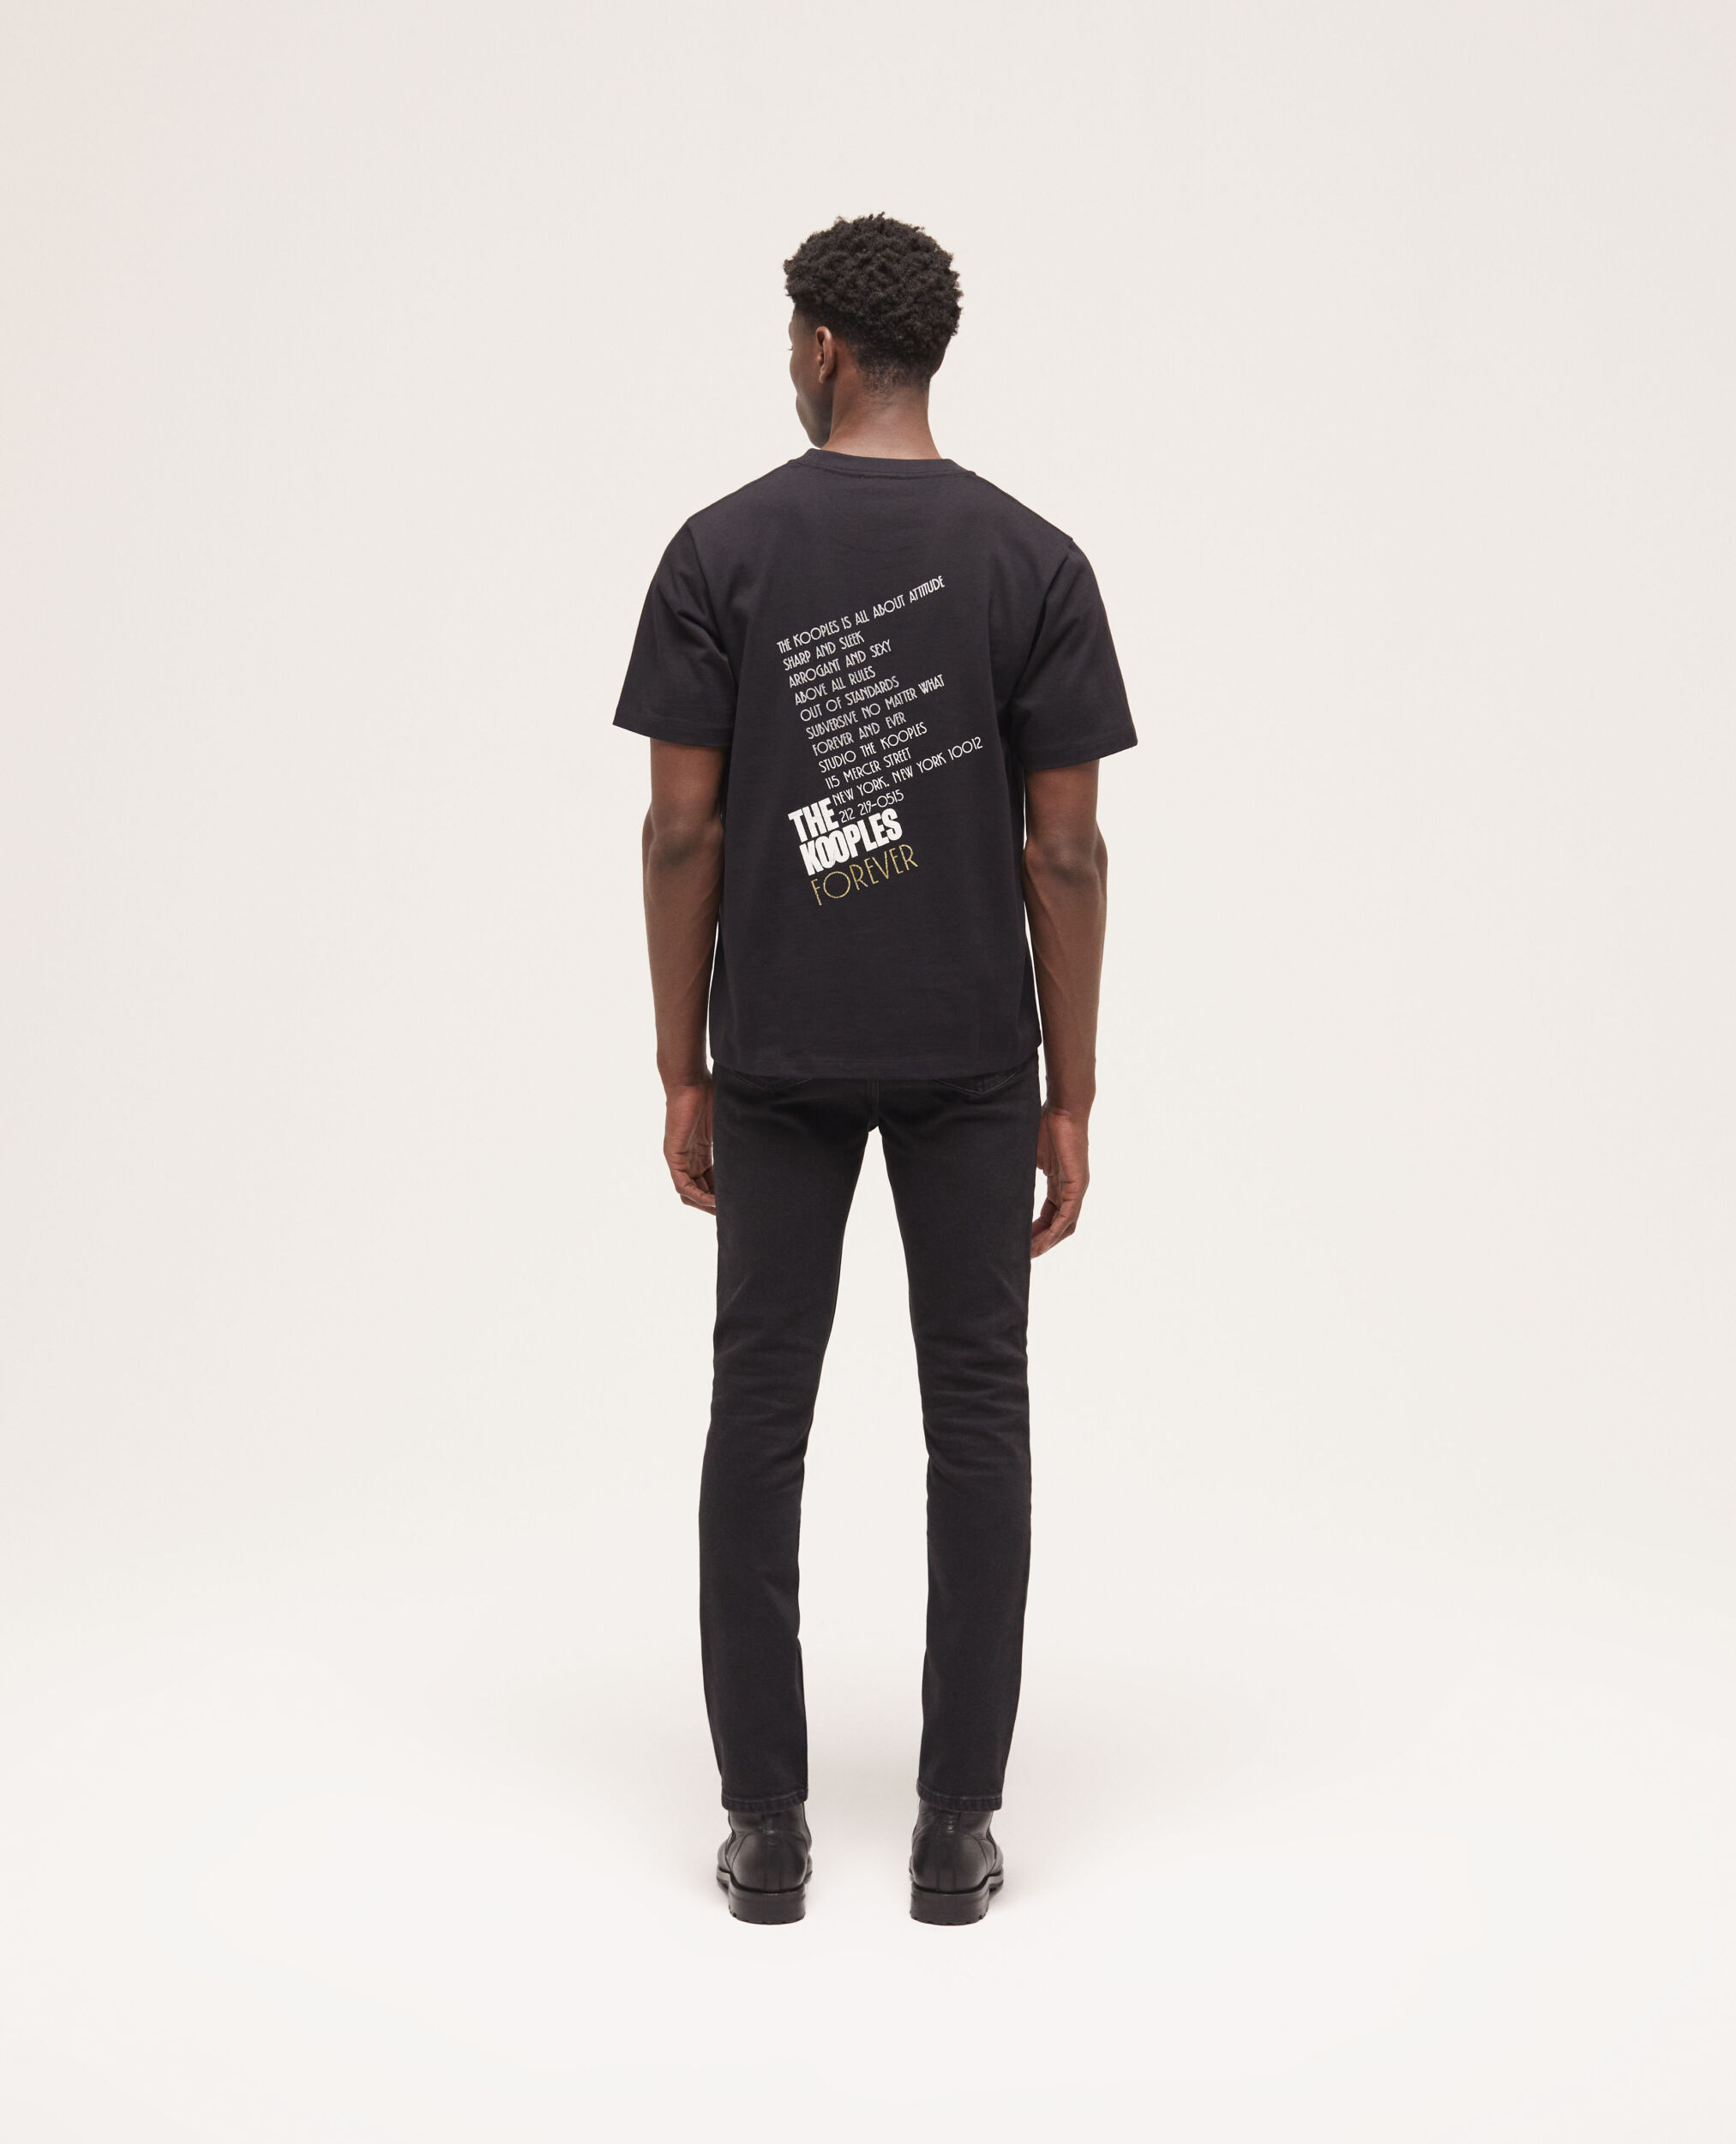 Schwarzes T-Shirt Herren mit Siebdruck, BLACK-ANTIC GOLD, hi-res image number null